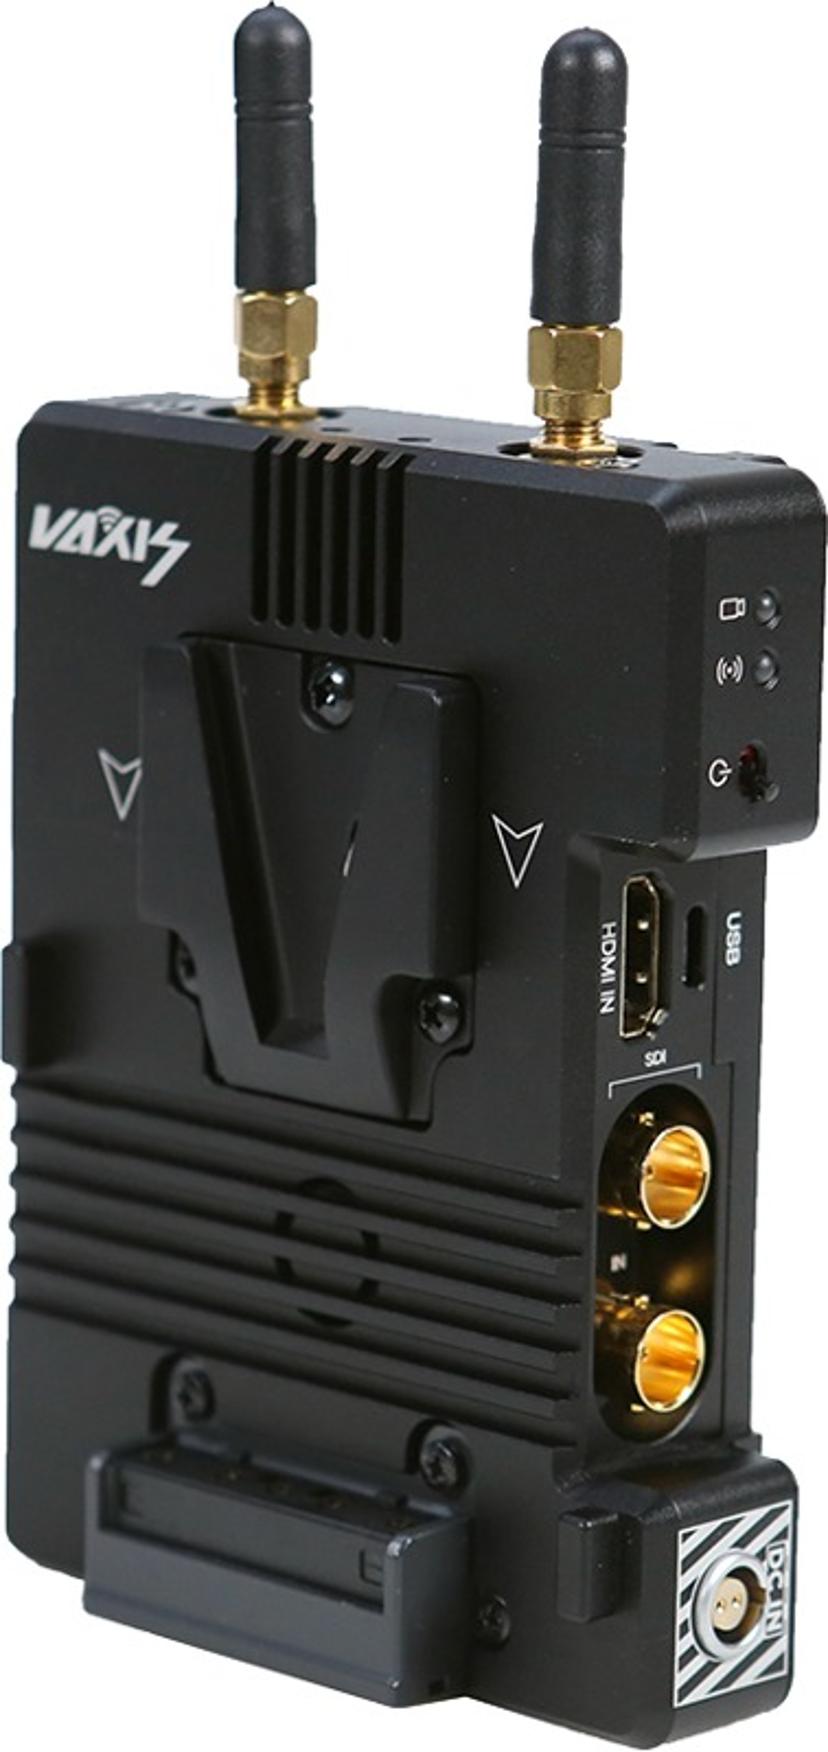 VAXIS Storm 3000 DV TX (V mount)